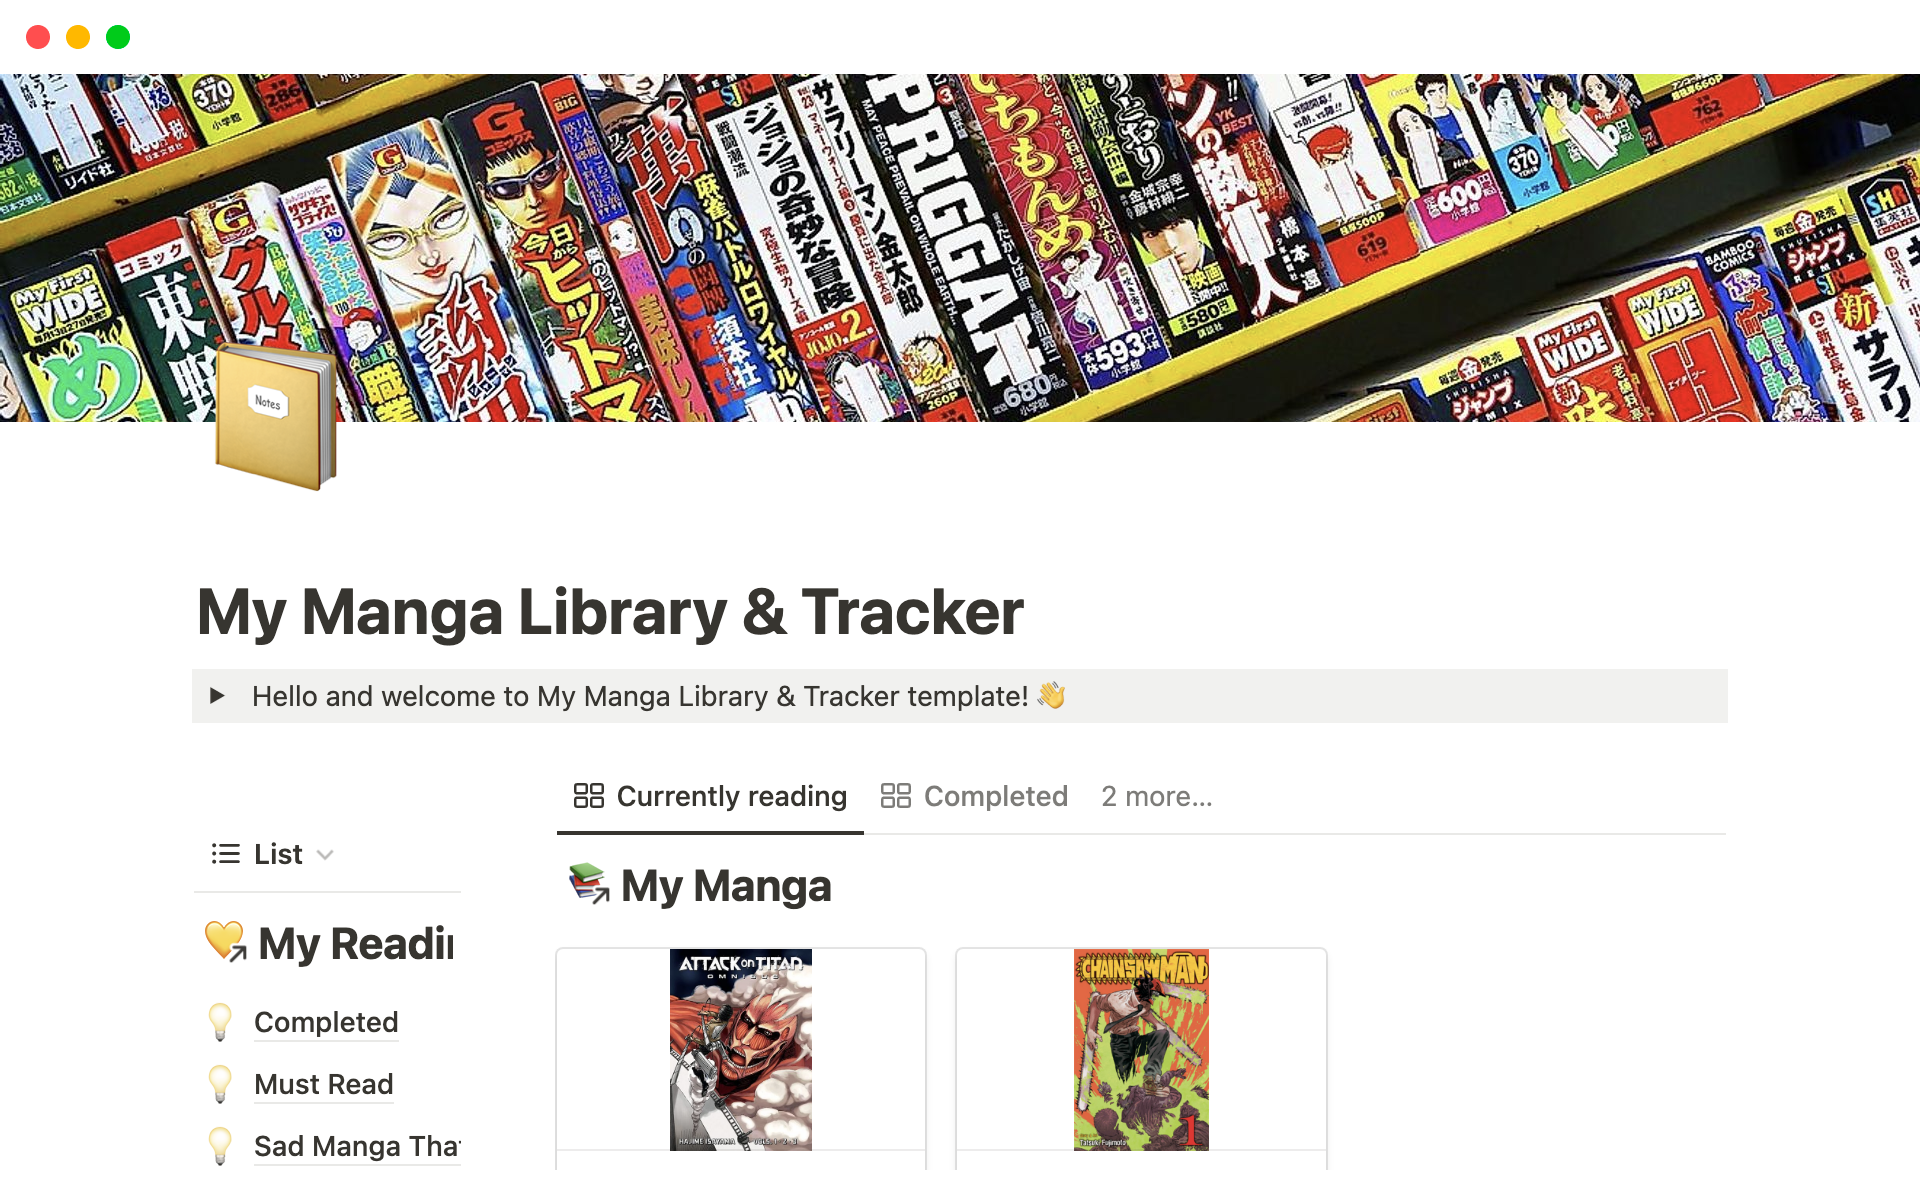 Aperçu du modèle de My Manga Library & Tracker